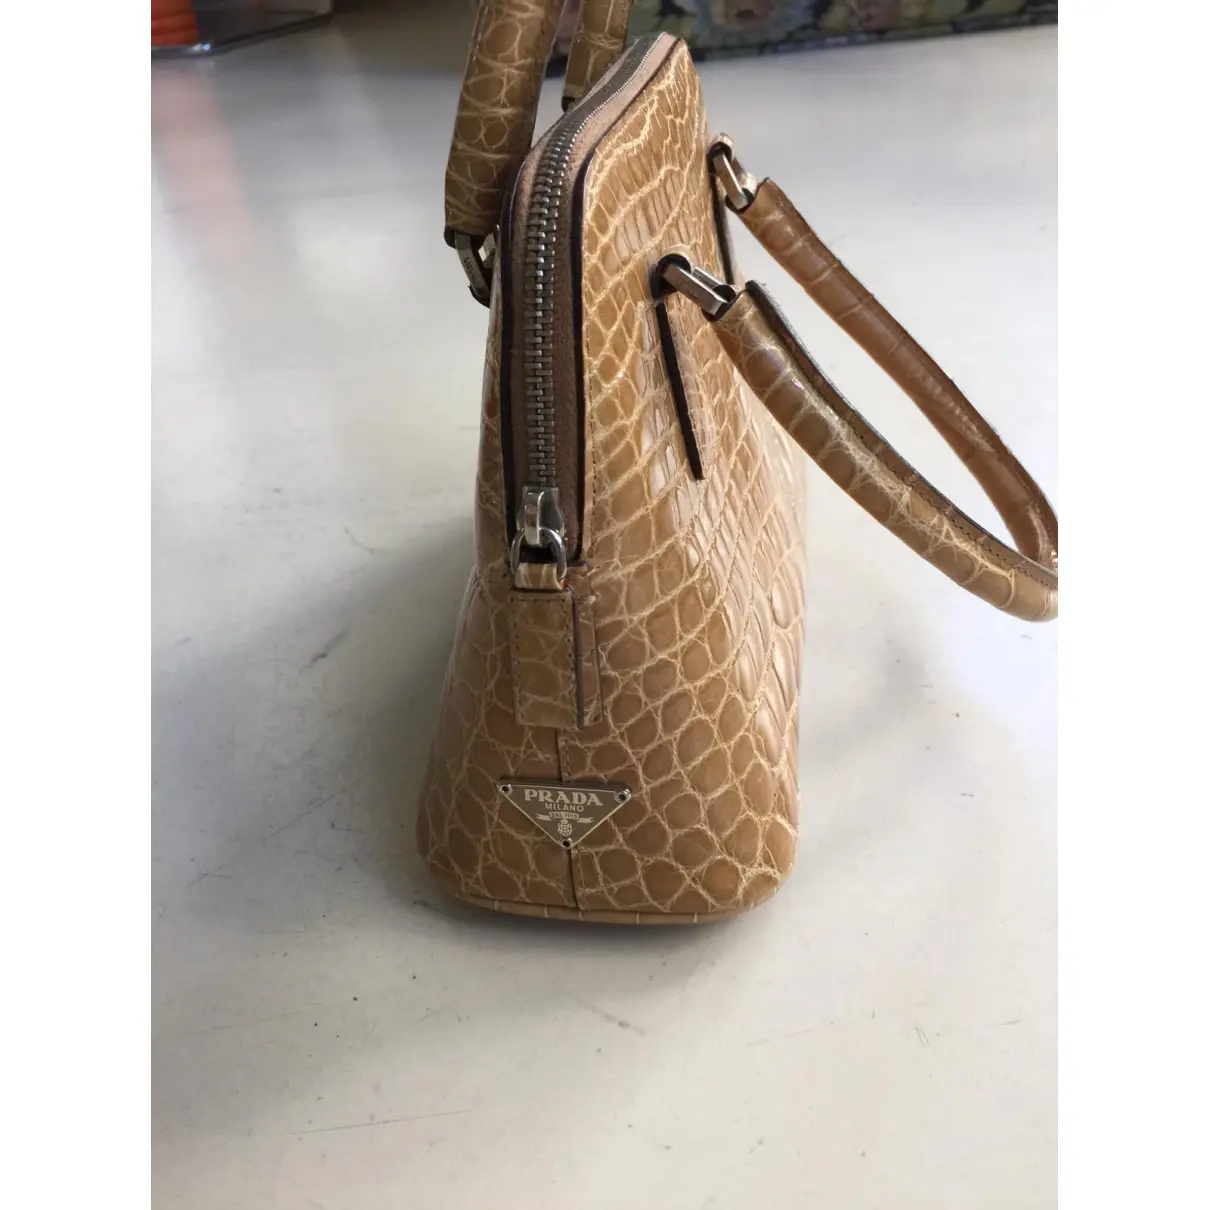 Prada Exotic leathers handbag for sale